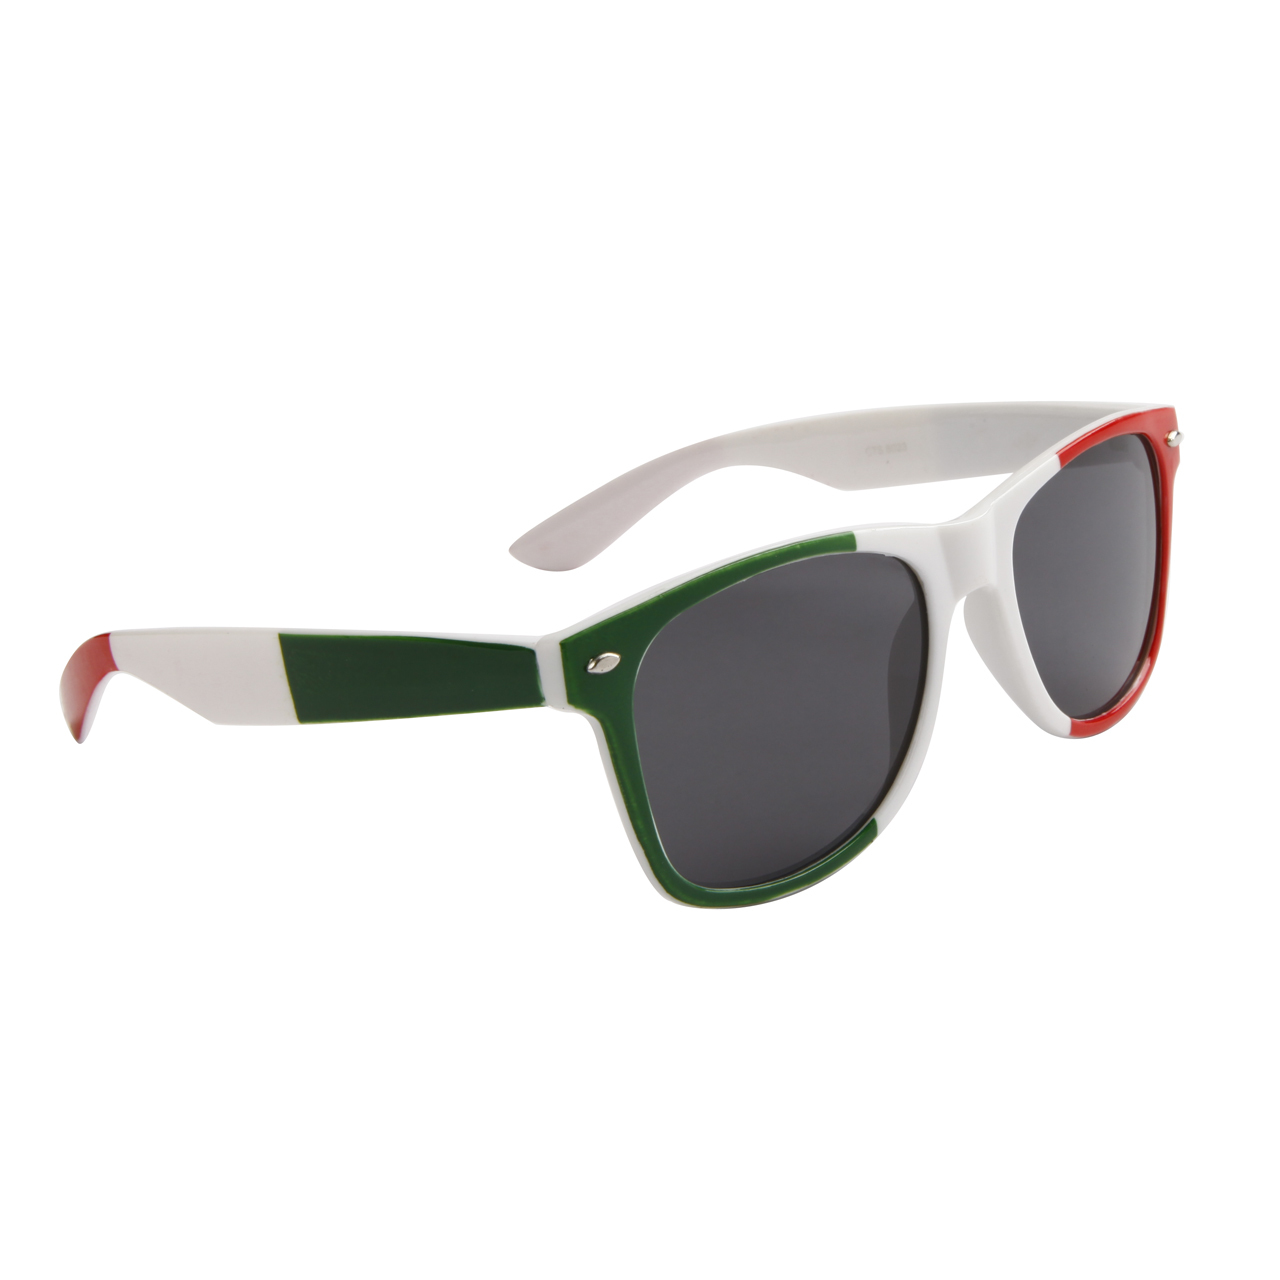 New California Classics Sunglasses: Hot Neon Colors